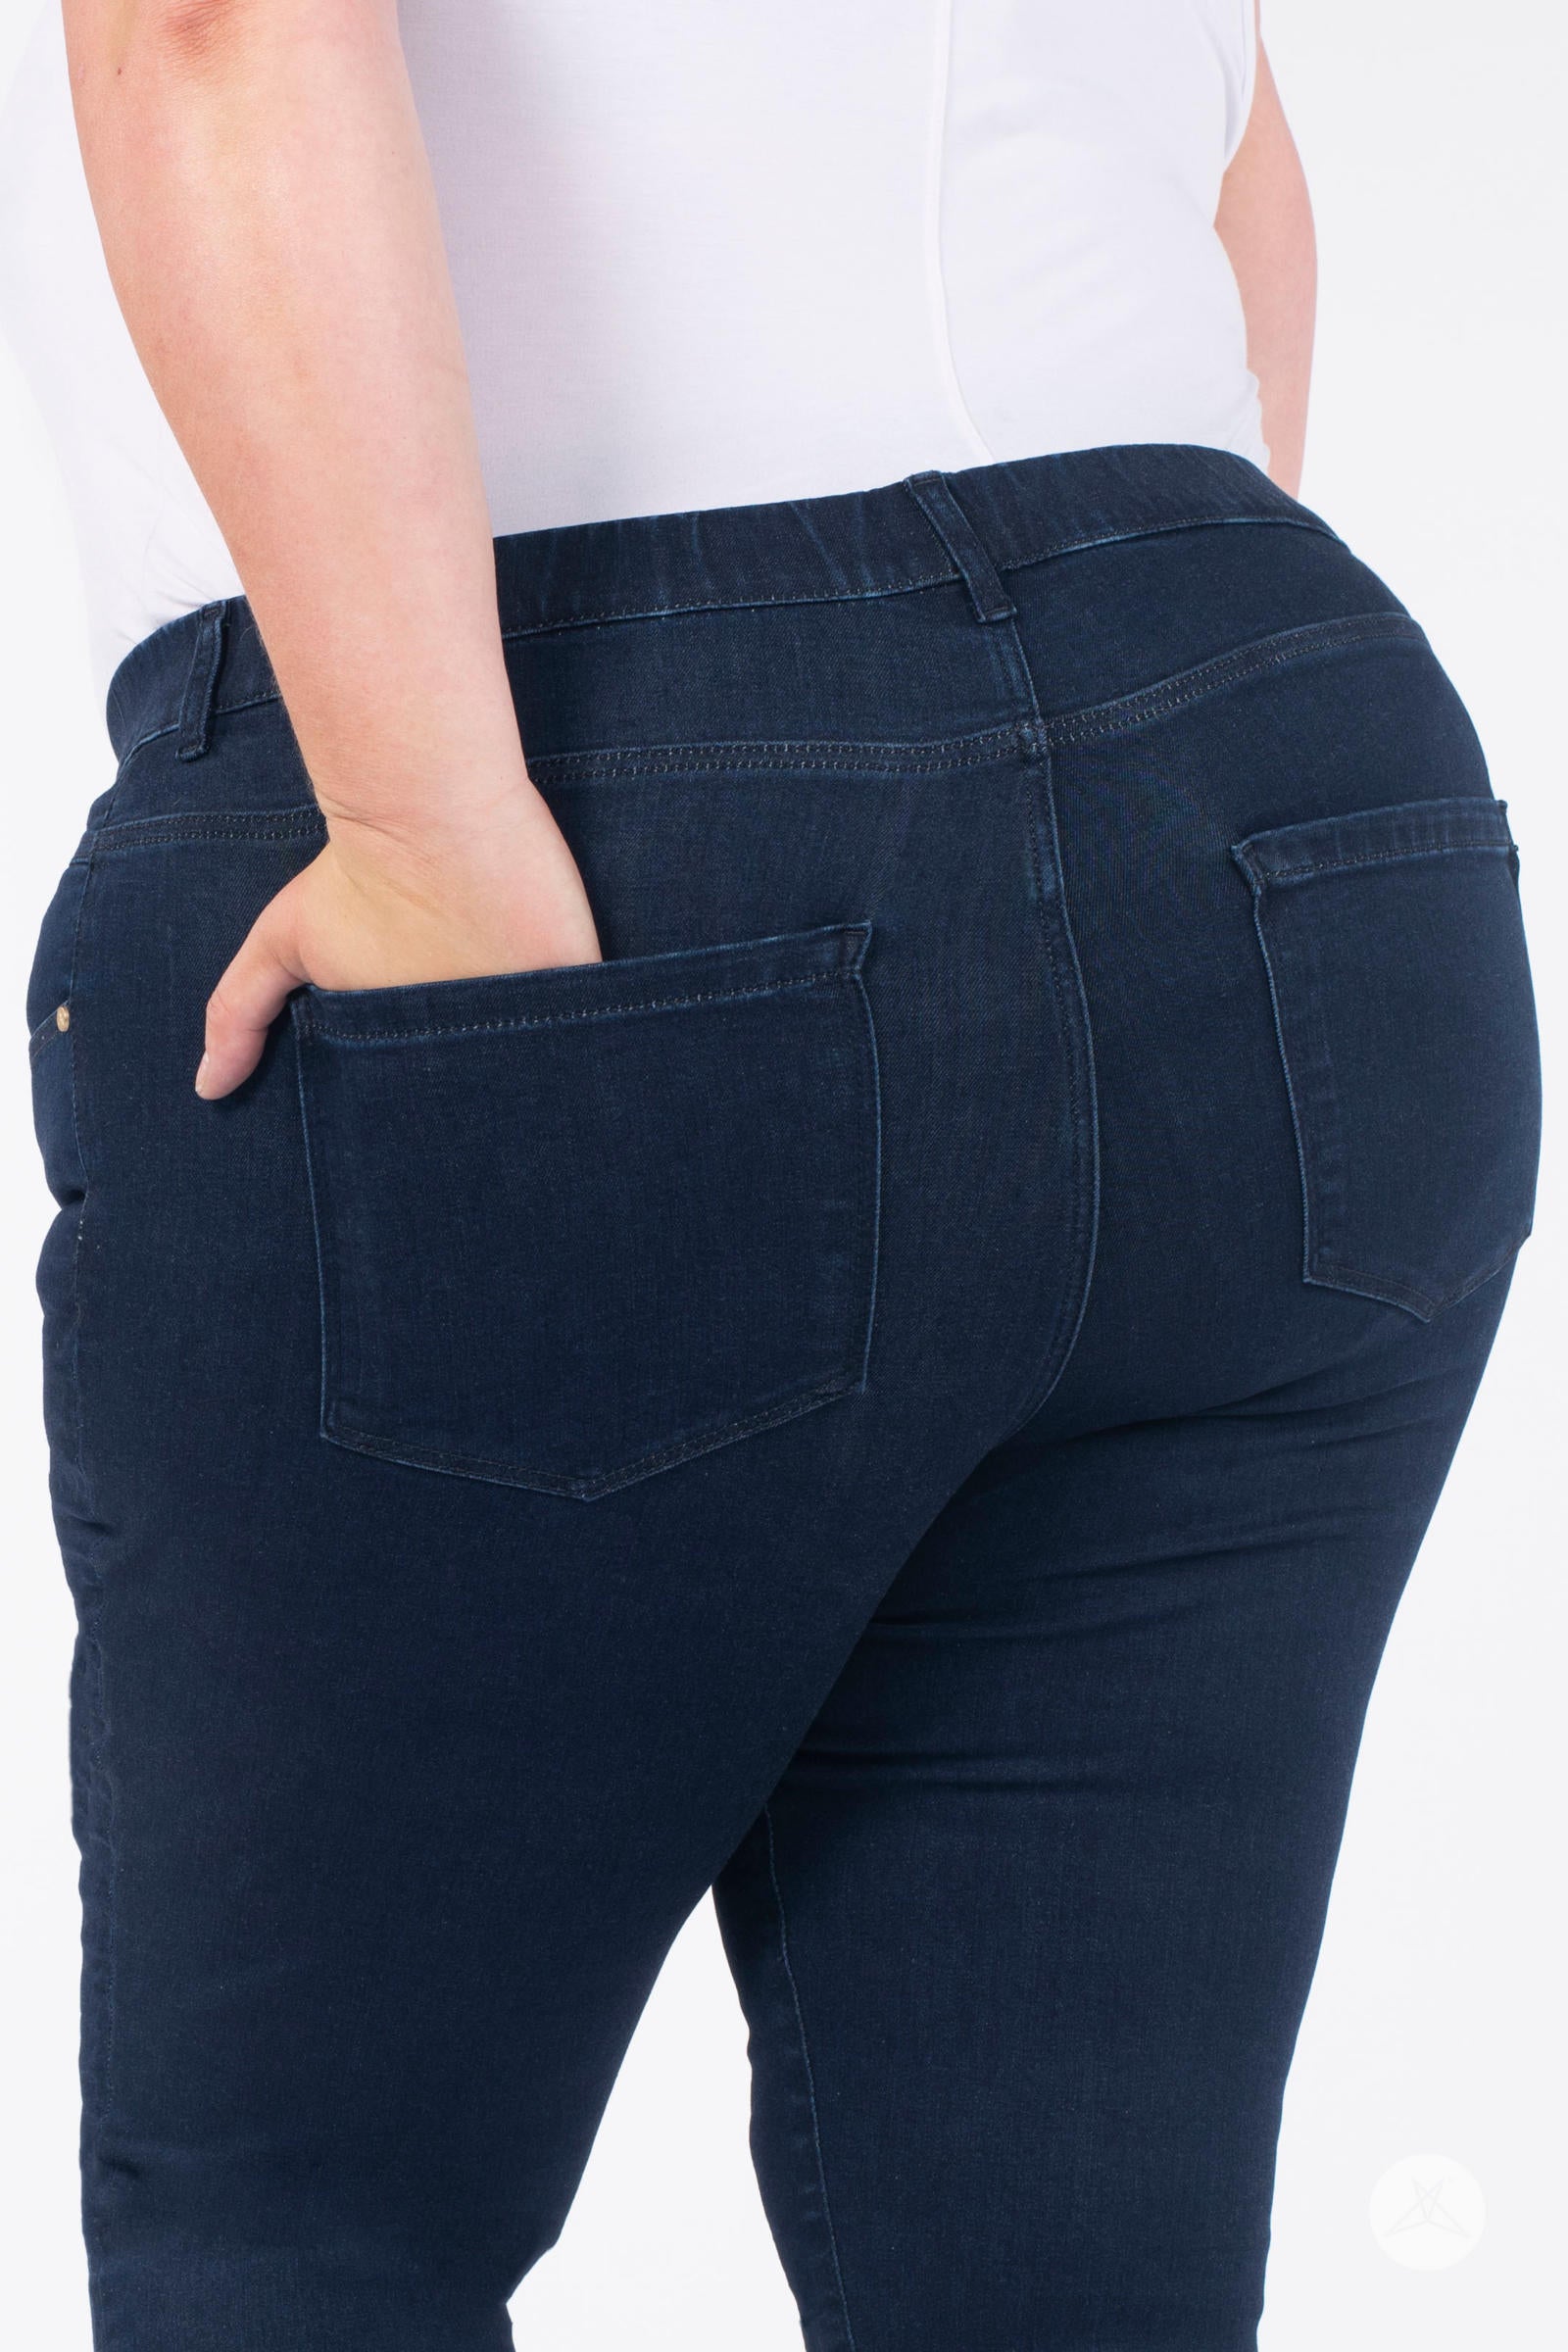 NWT Womens GAP Denim Legging Jeans Mid Rise Dark Indigo Jeggings